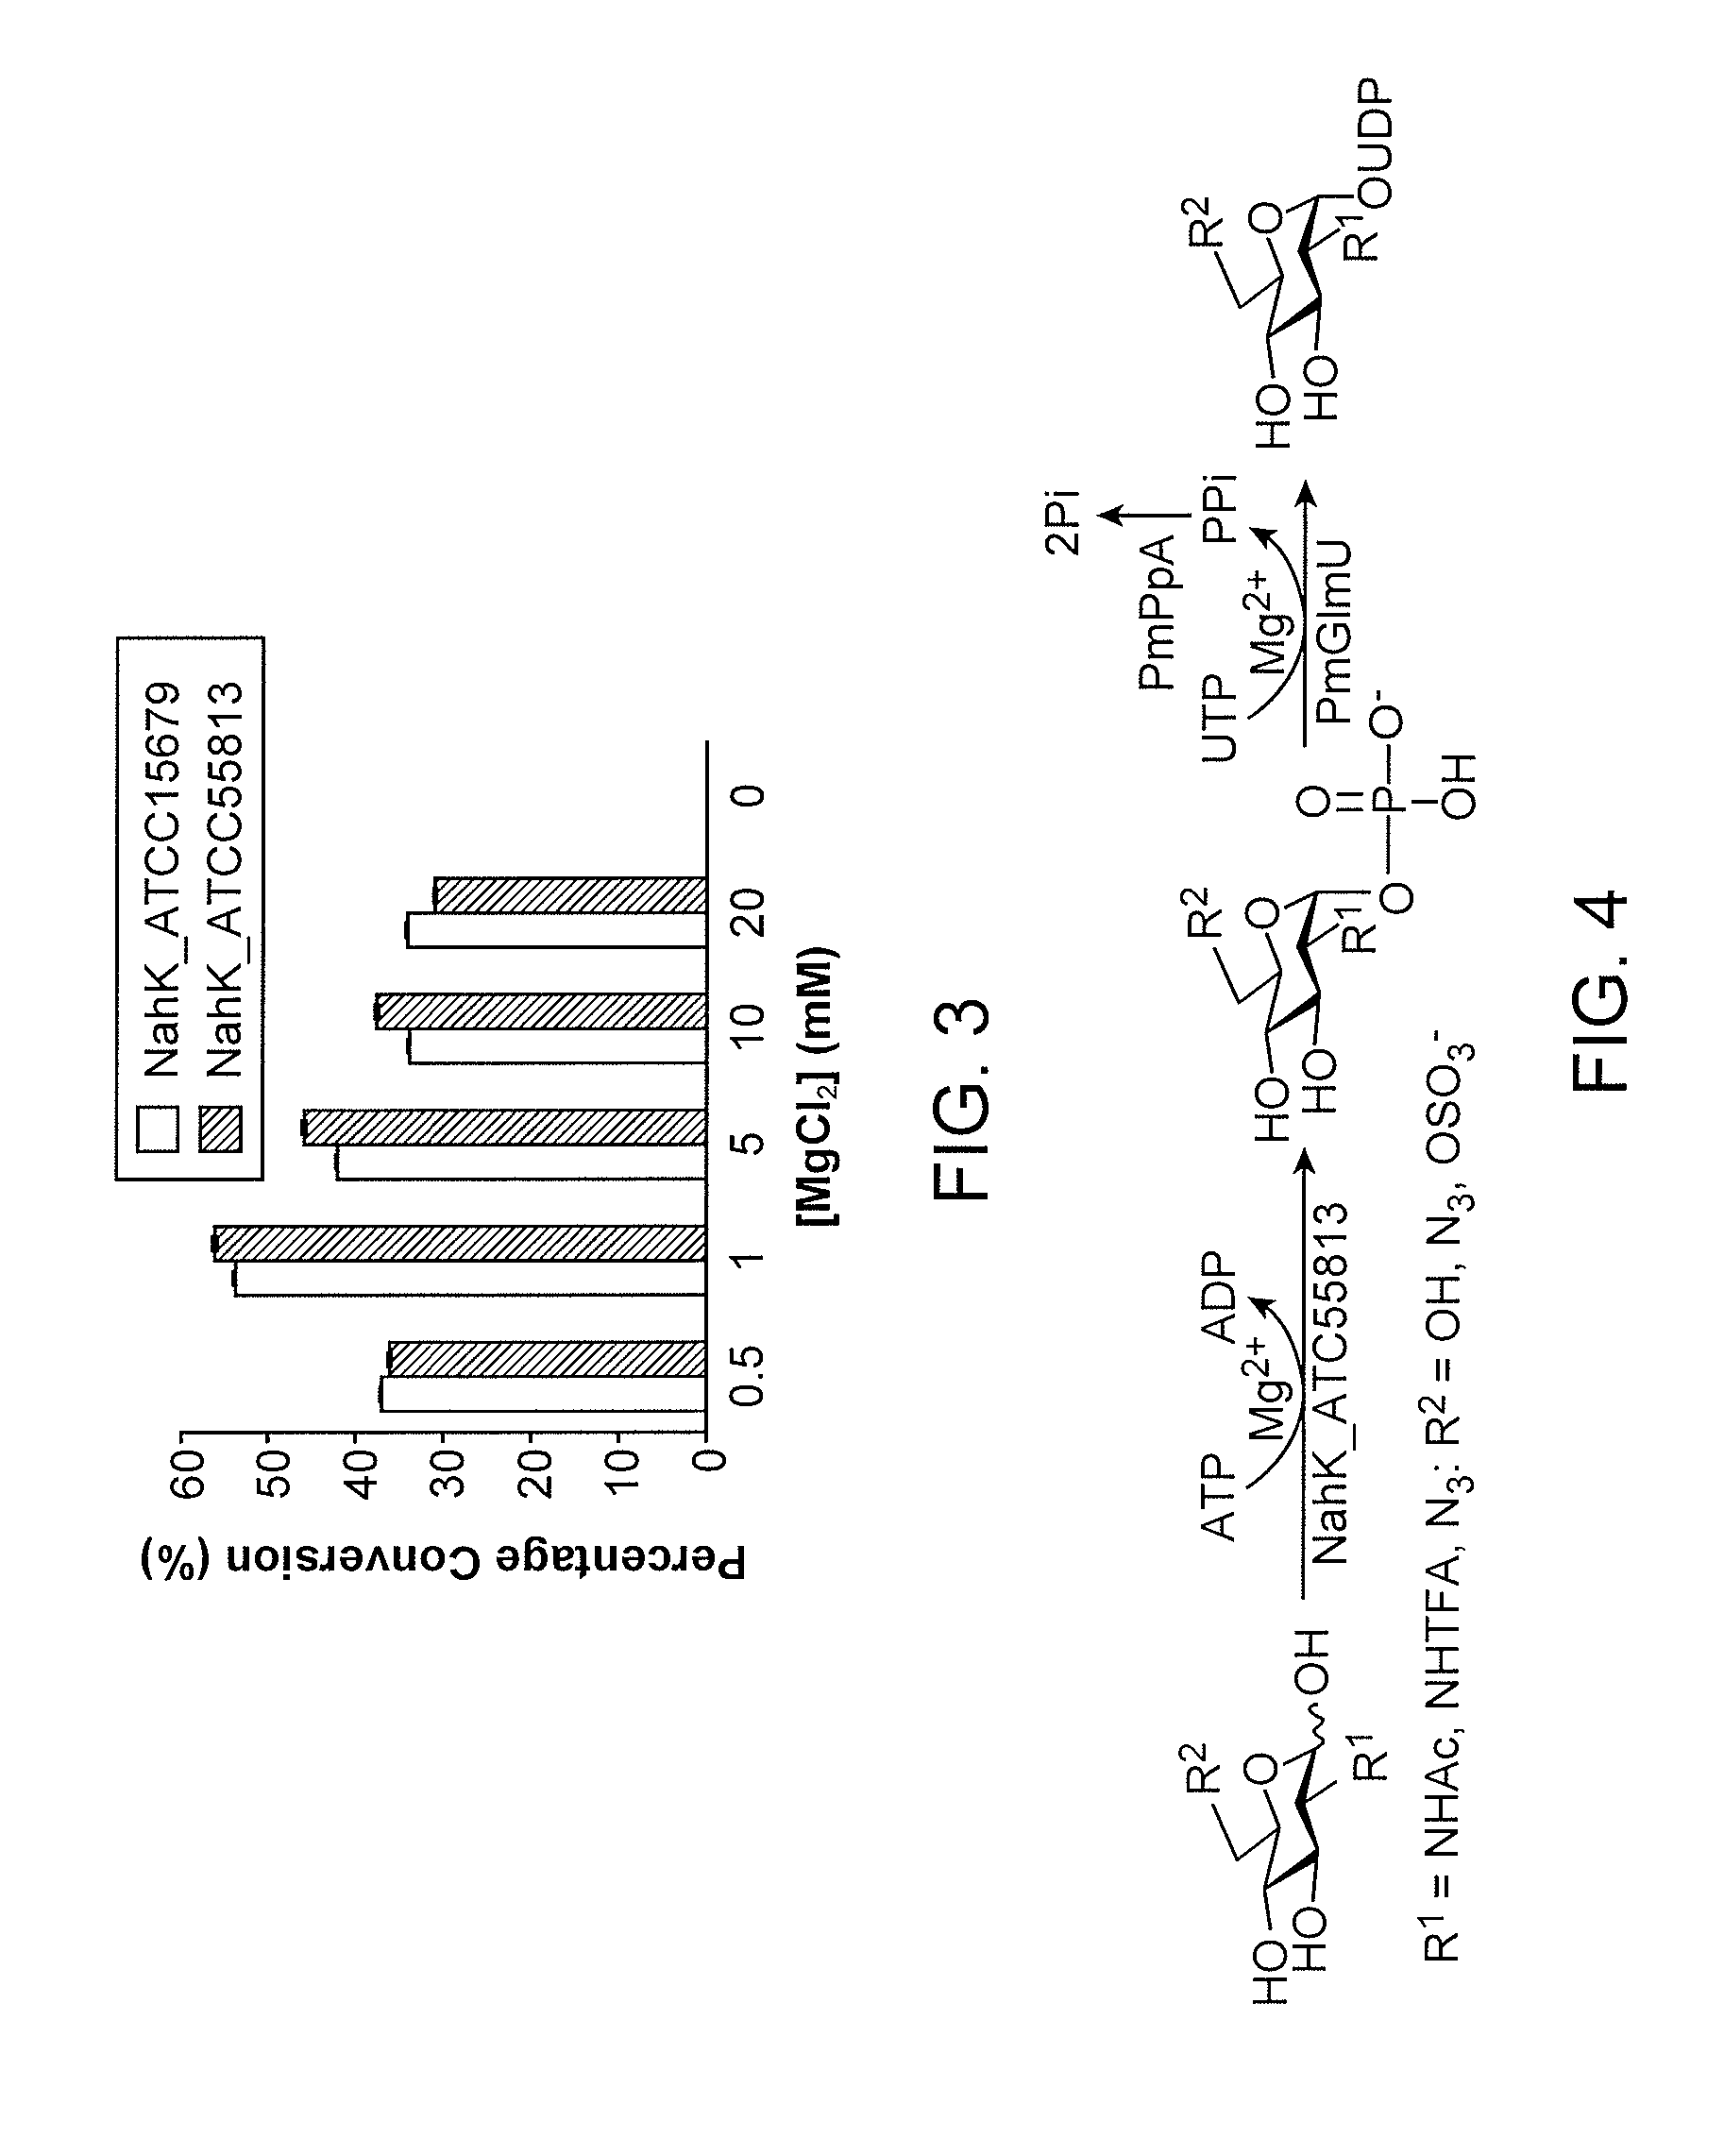 Chemoenzymatic synthesis of heparin and heparan sulfate analogs